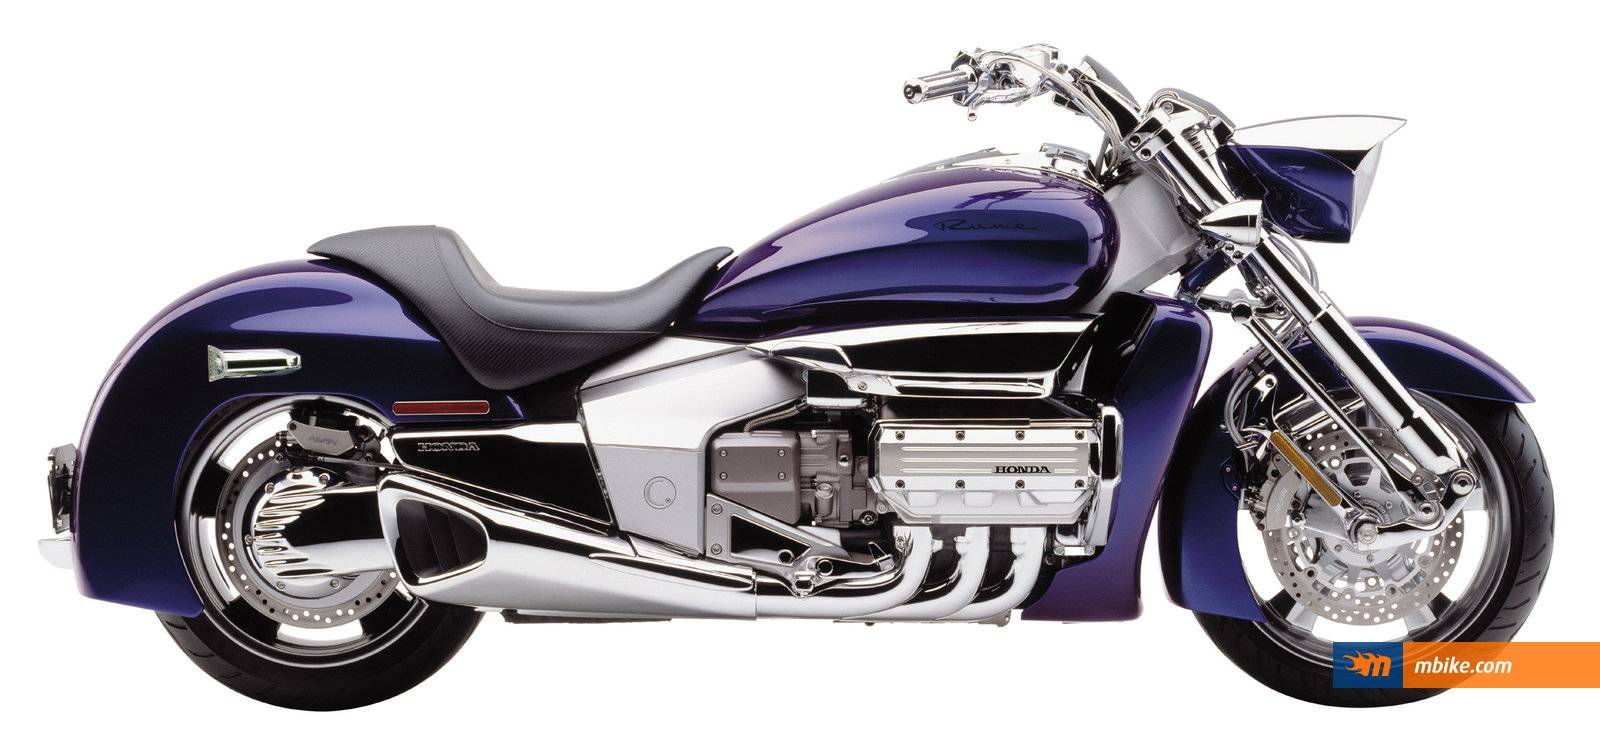 Мотоцикл honda nrx-1800 valkyrie rune: познаем подробно